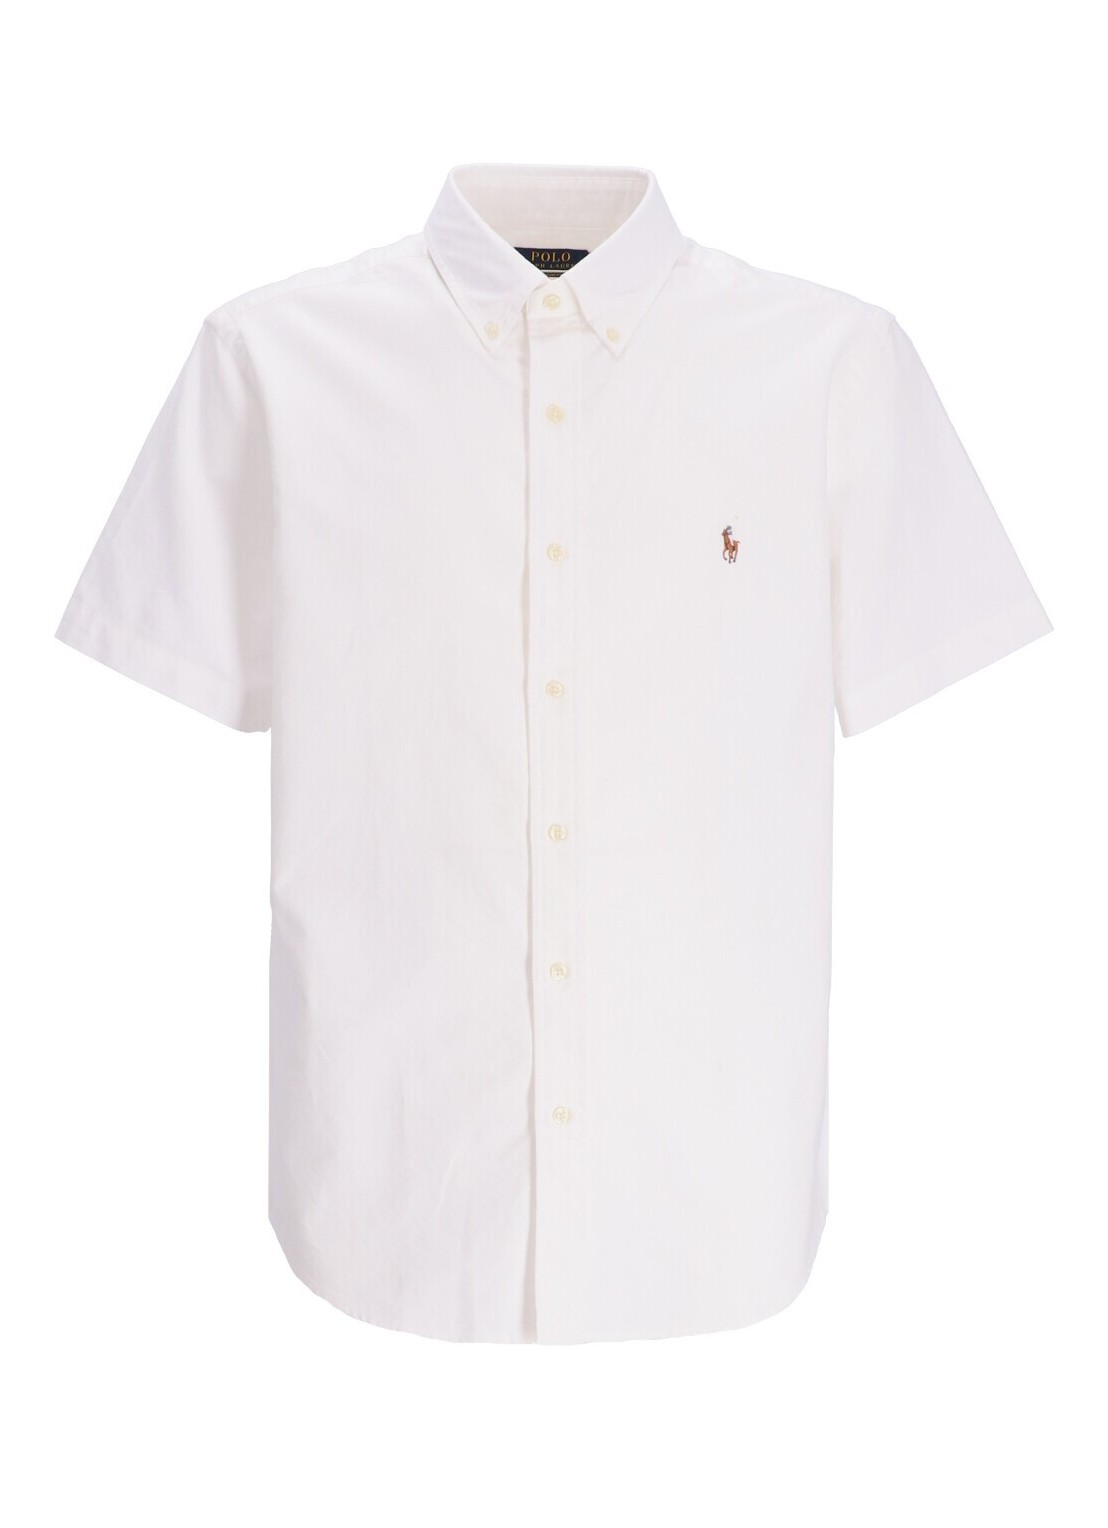 Camiseria polo ralph lauren shirt man cubdppcsss-short sleeve-sport 710850782002 white talla blanco
